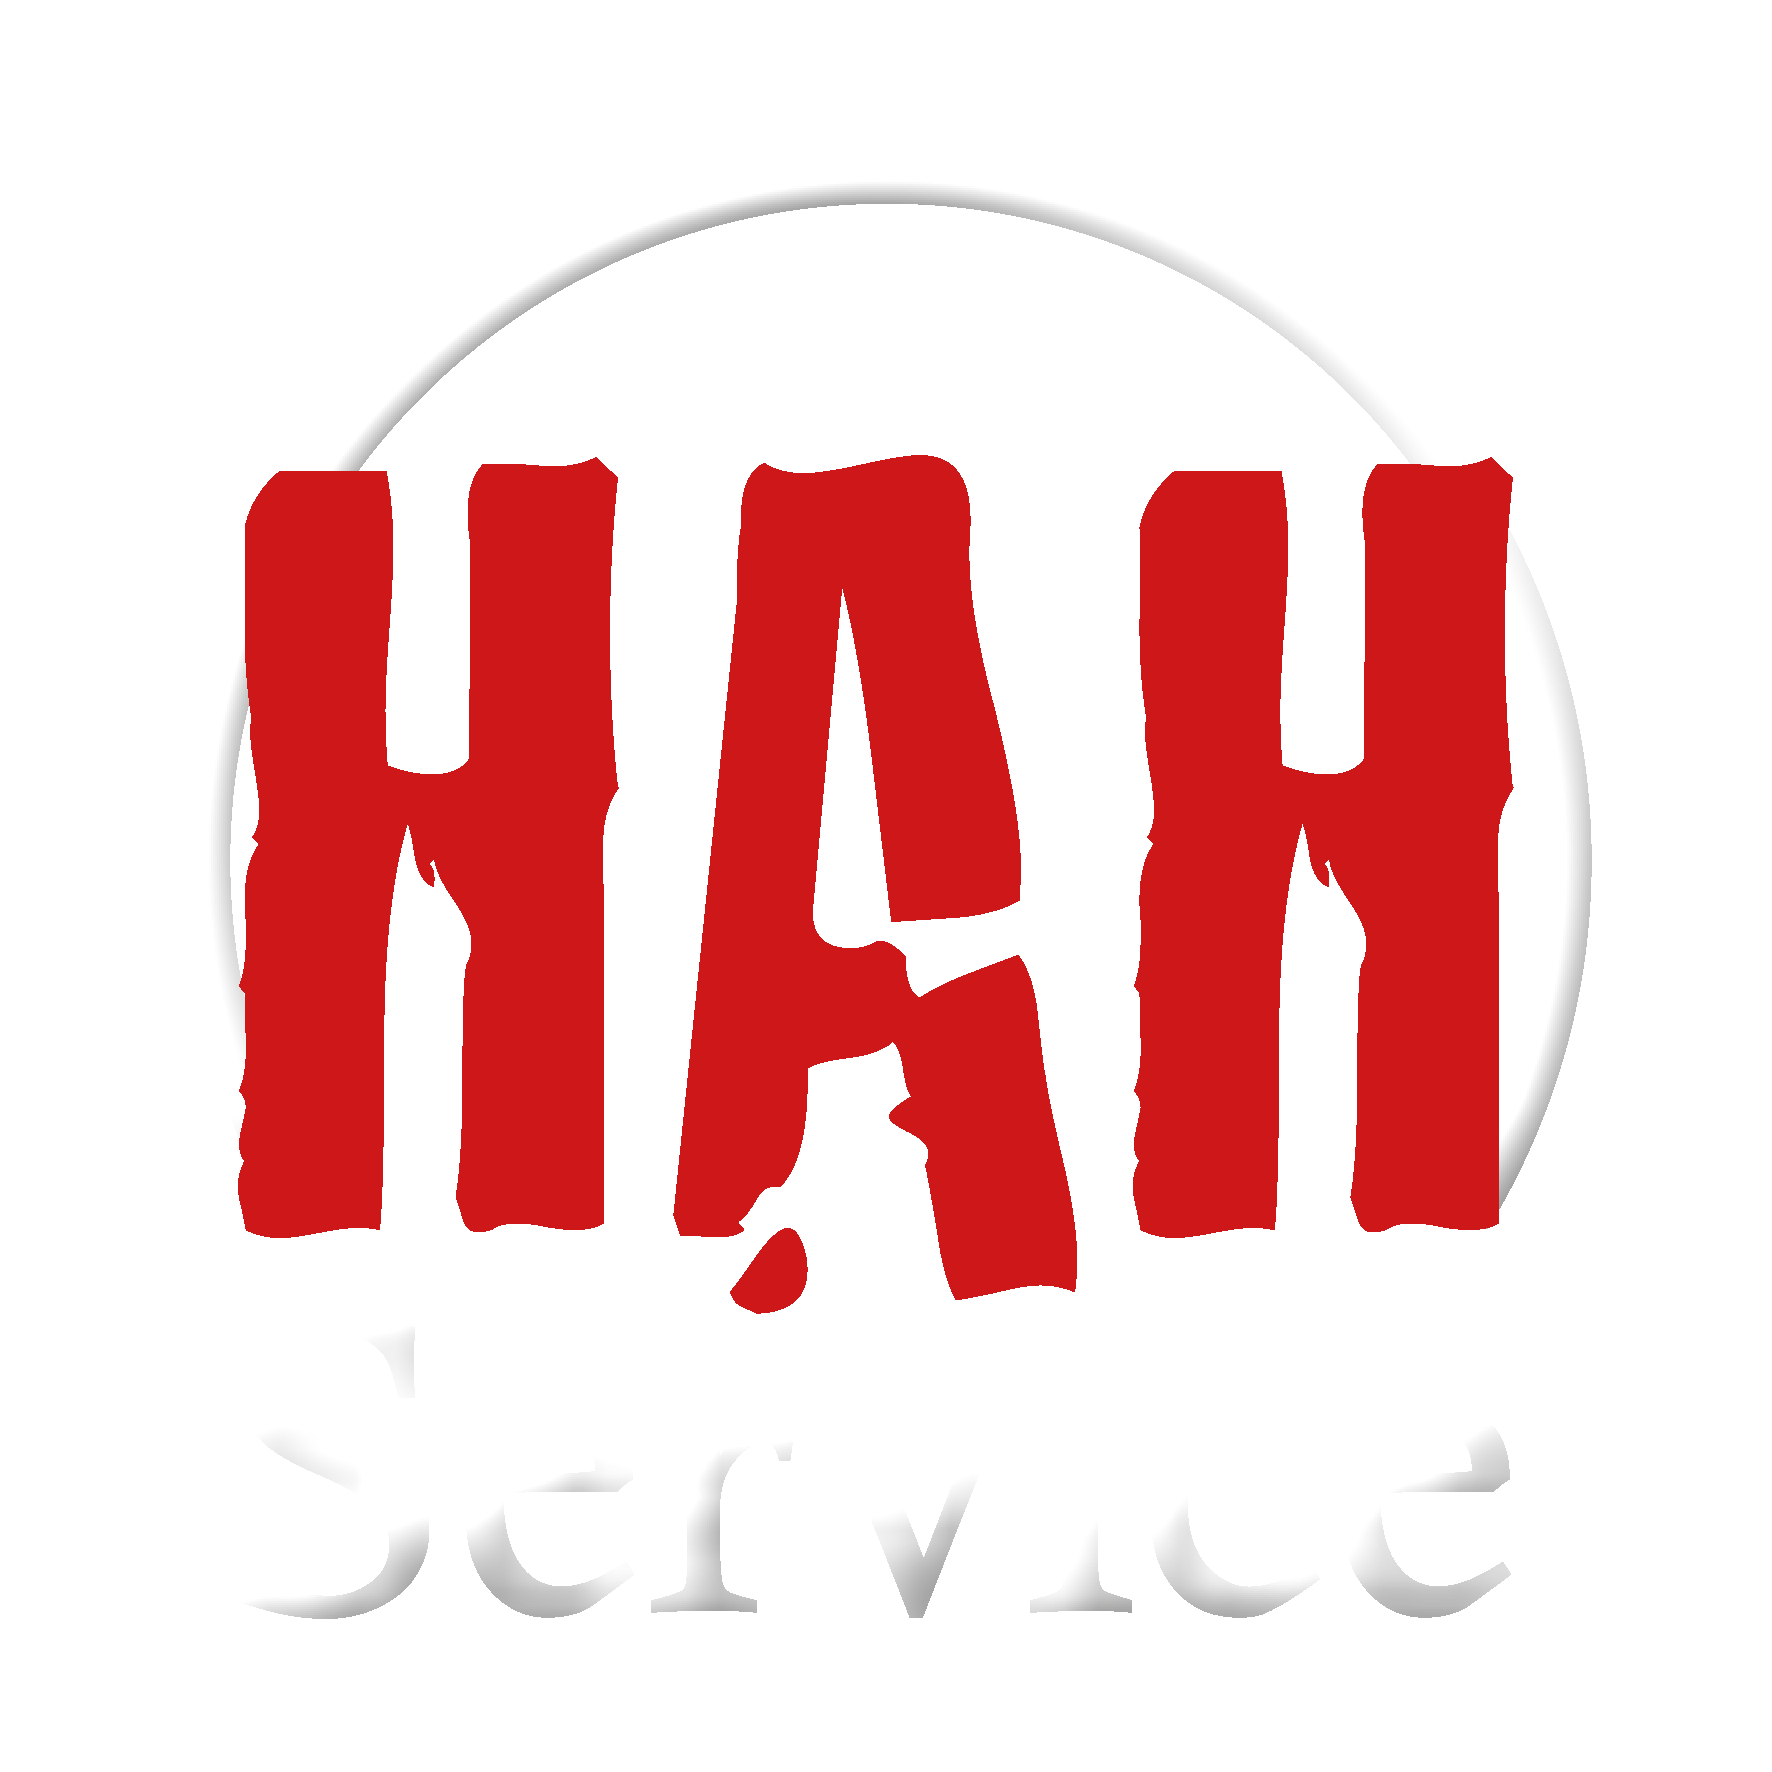 Hah Service